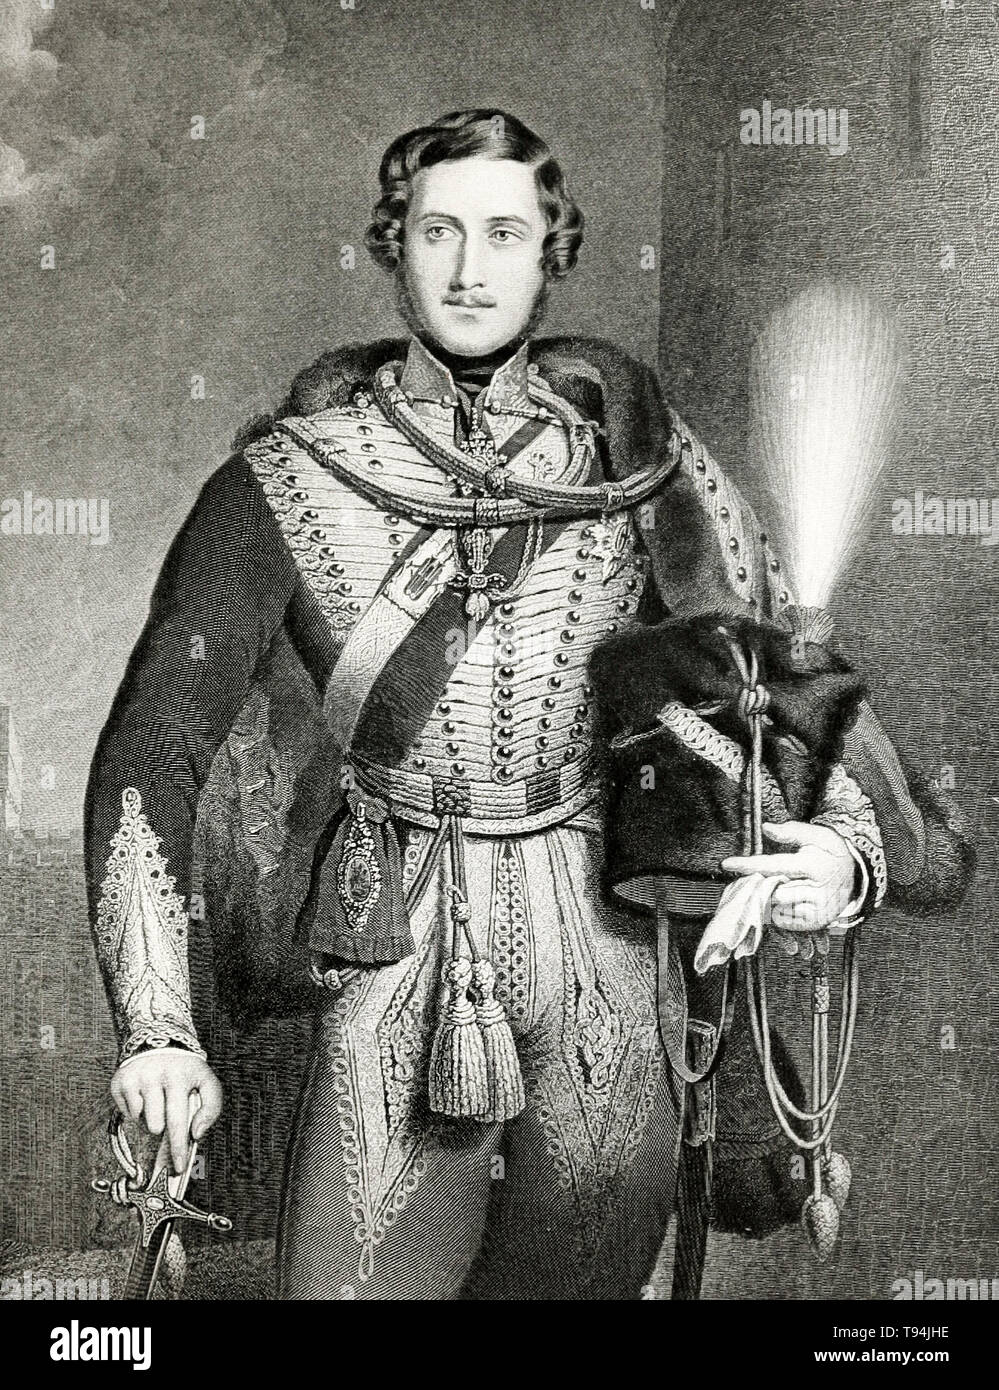 Prinz Albert, in Uniform, Porträt Gravur, 1900 Stockfoto